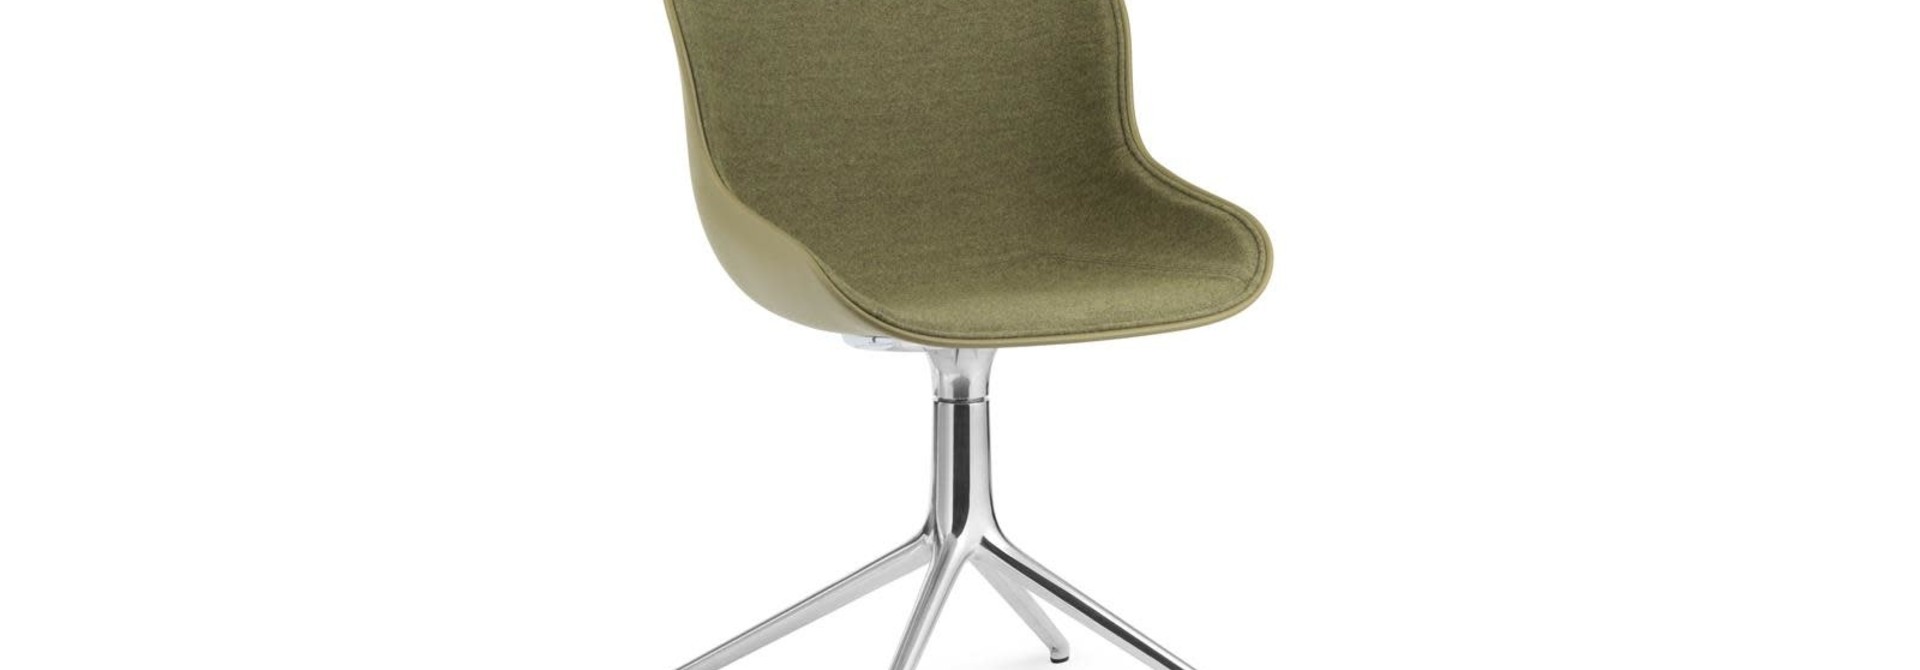 Hyg chair swivel - Front upholstery